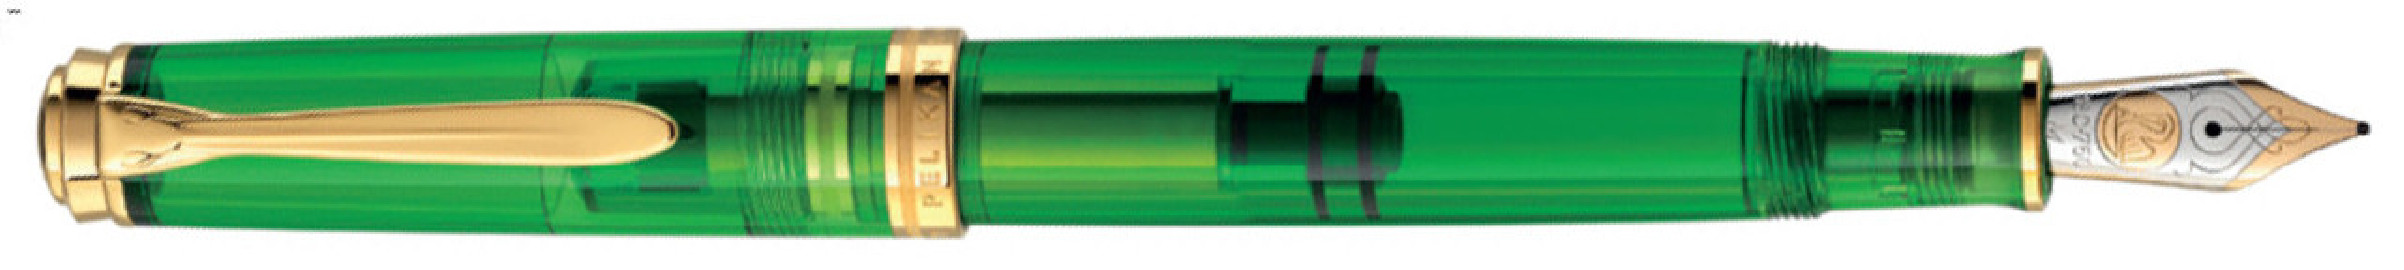 Pelikan M800 Special Edition Souverän Green Demonstrator fountain pen